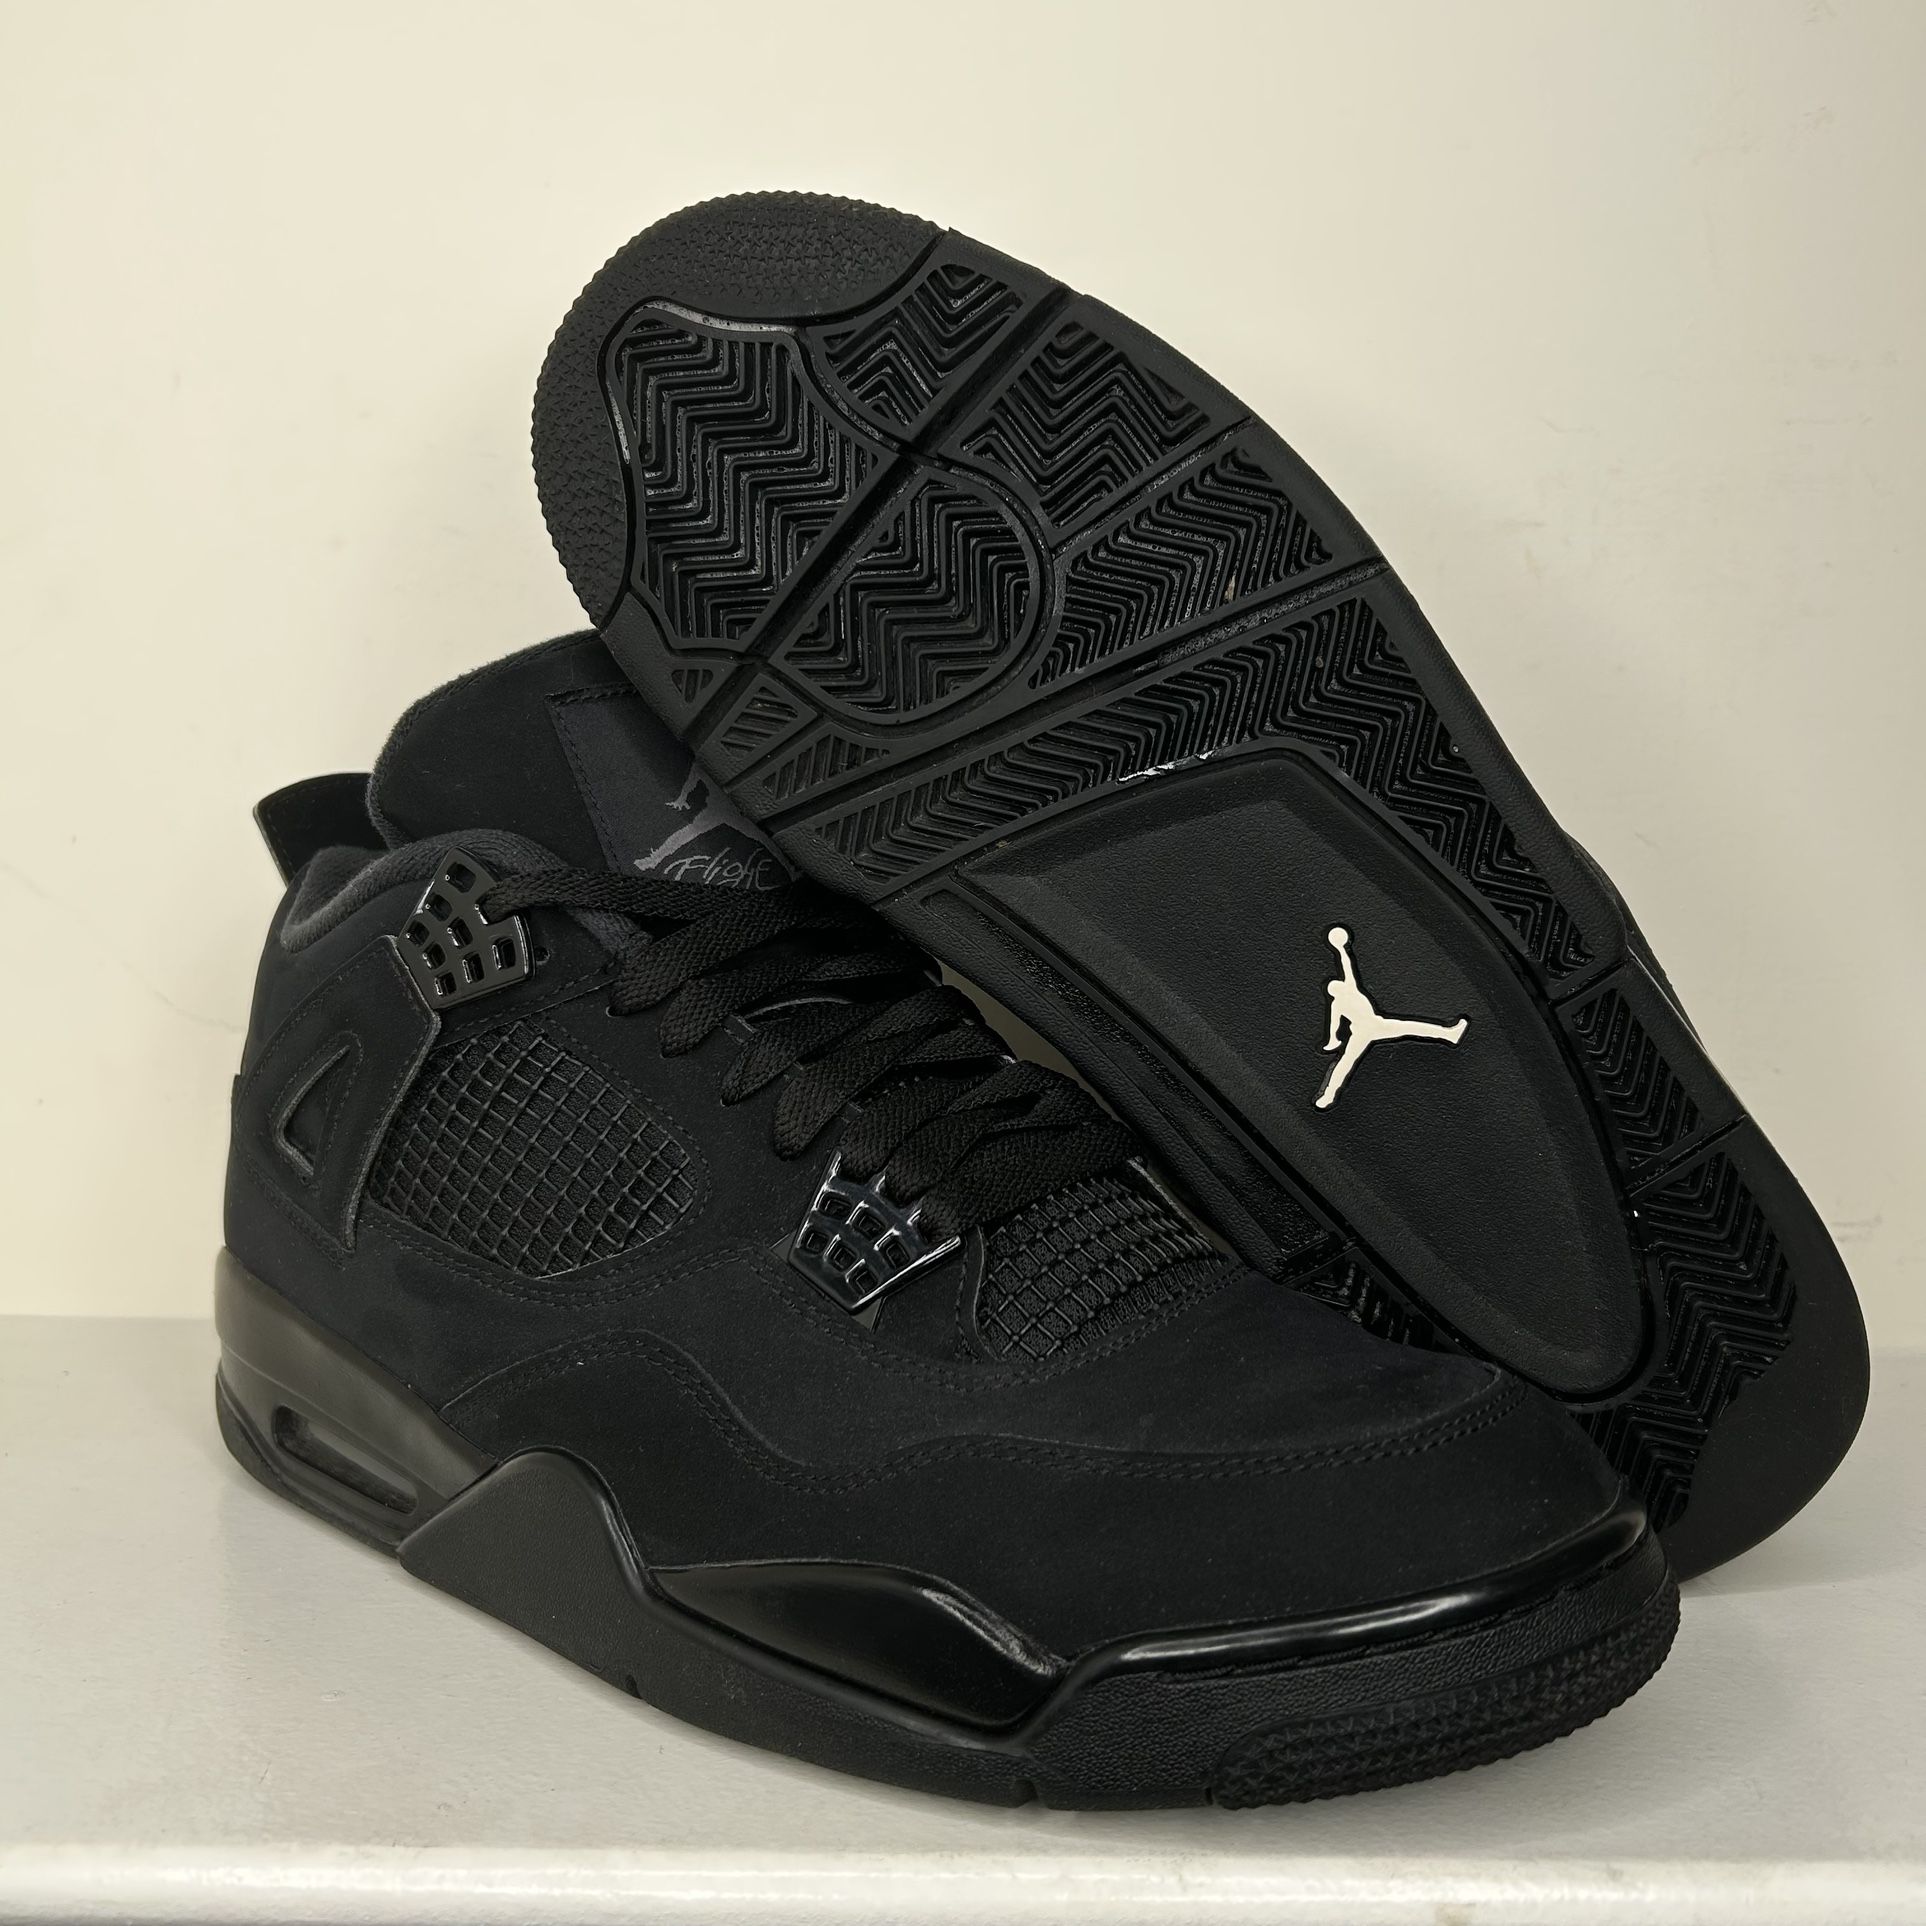 Nike Air Jordan 4 Retro Black Cat Size 12 Men’s Shoes